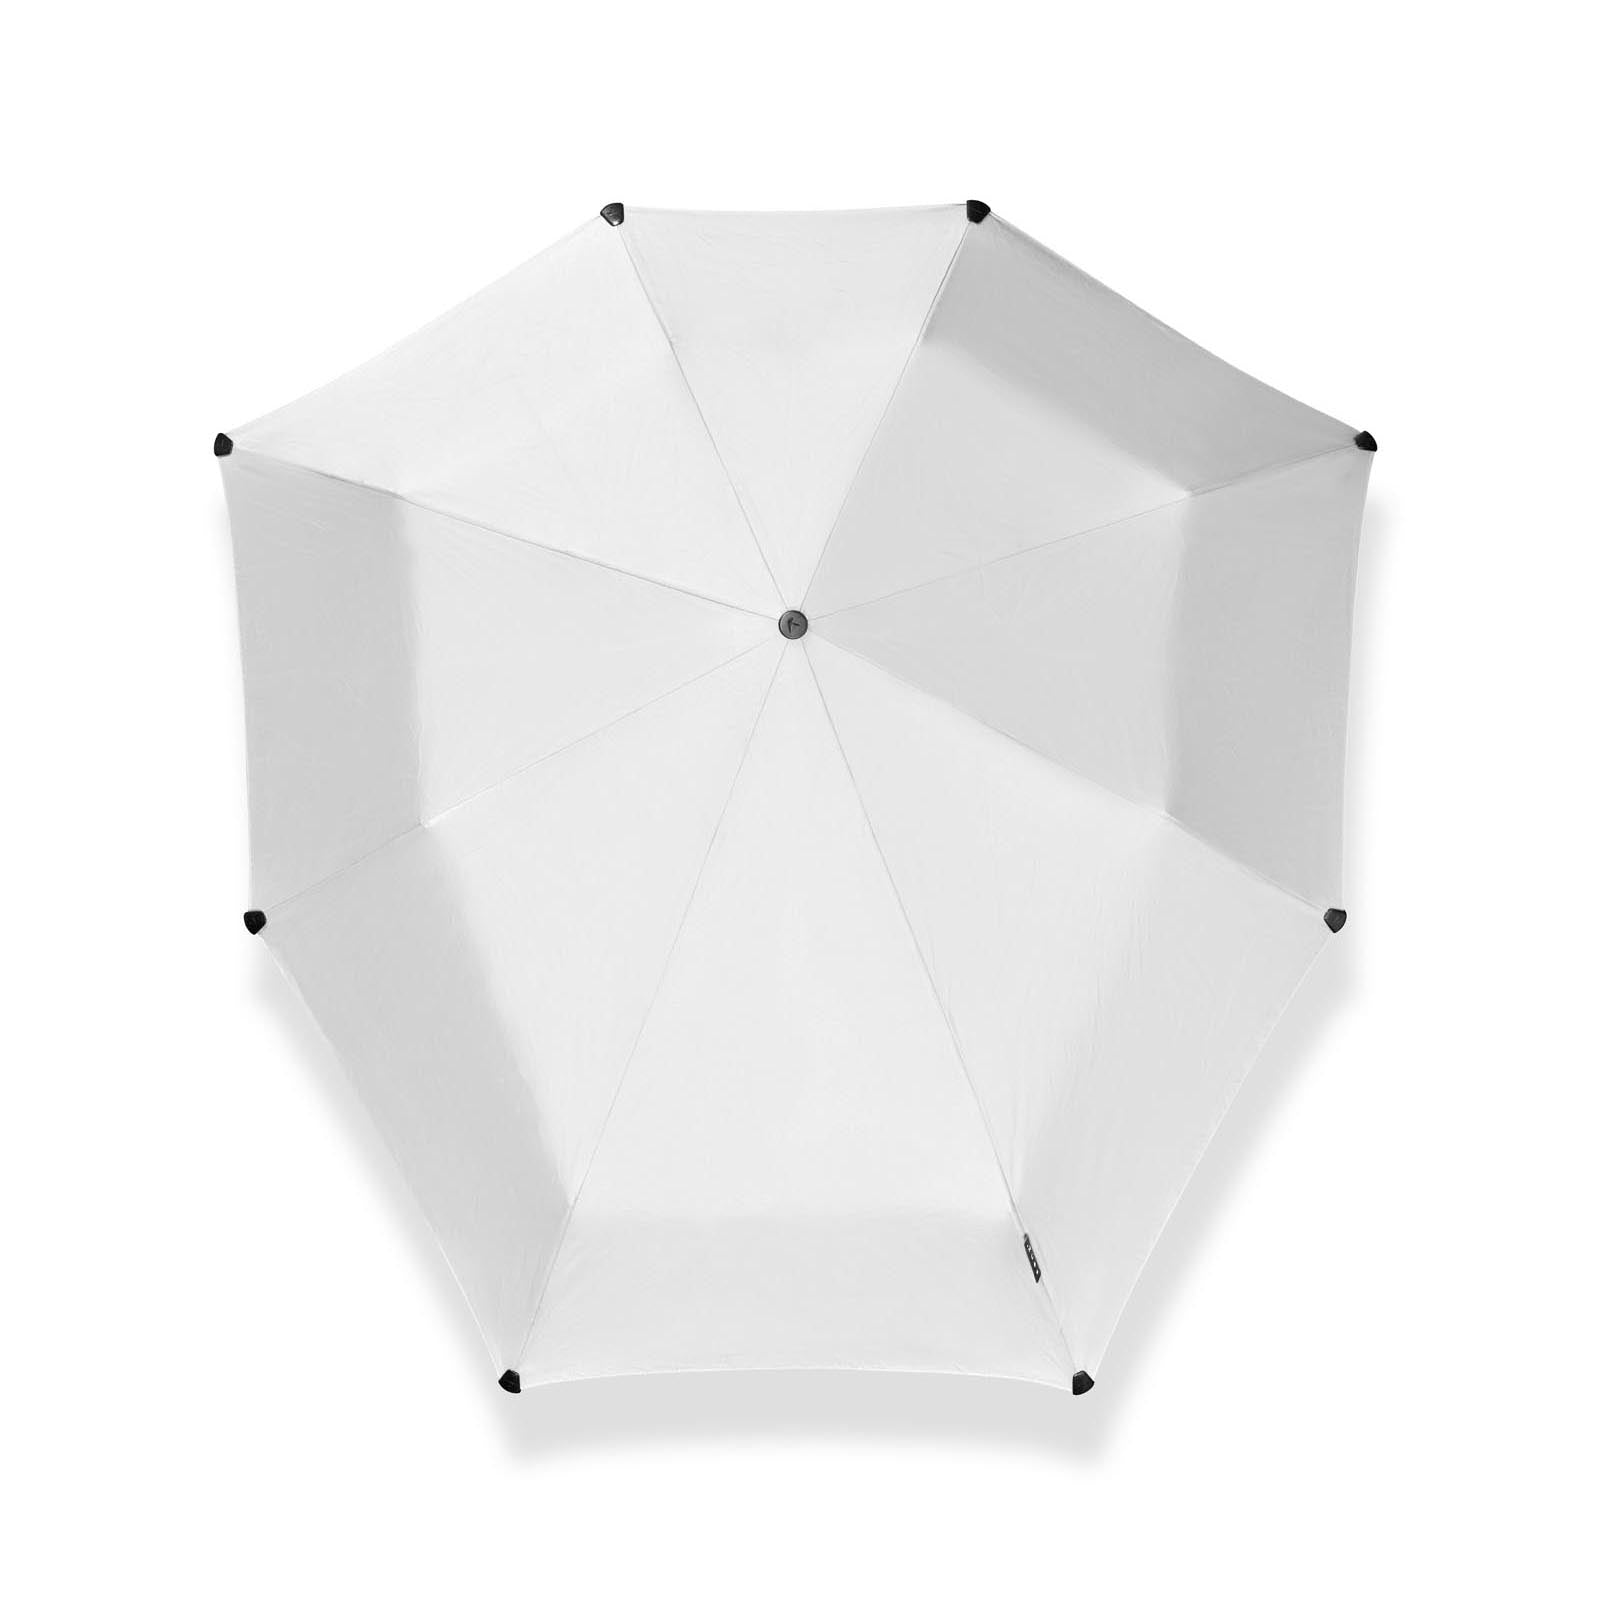 Paraplu's│Stormparaplu│Senz Umbrellas